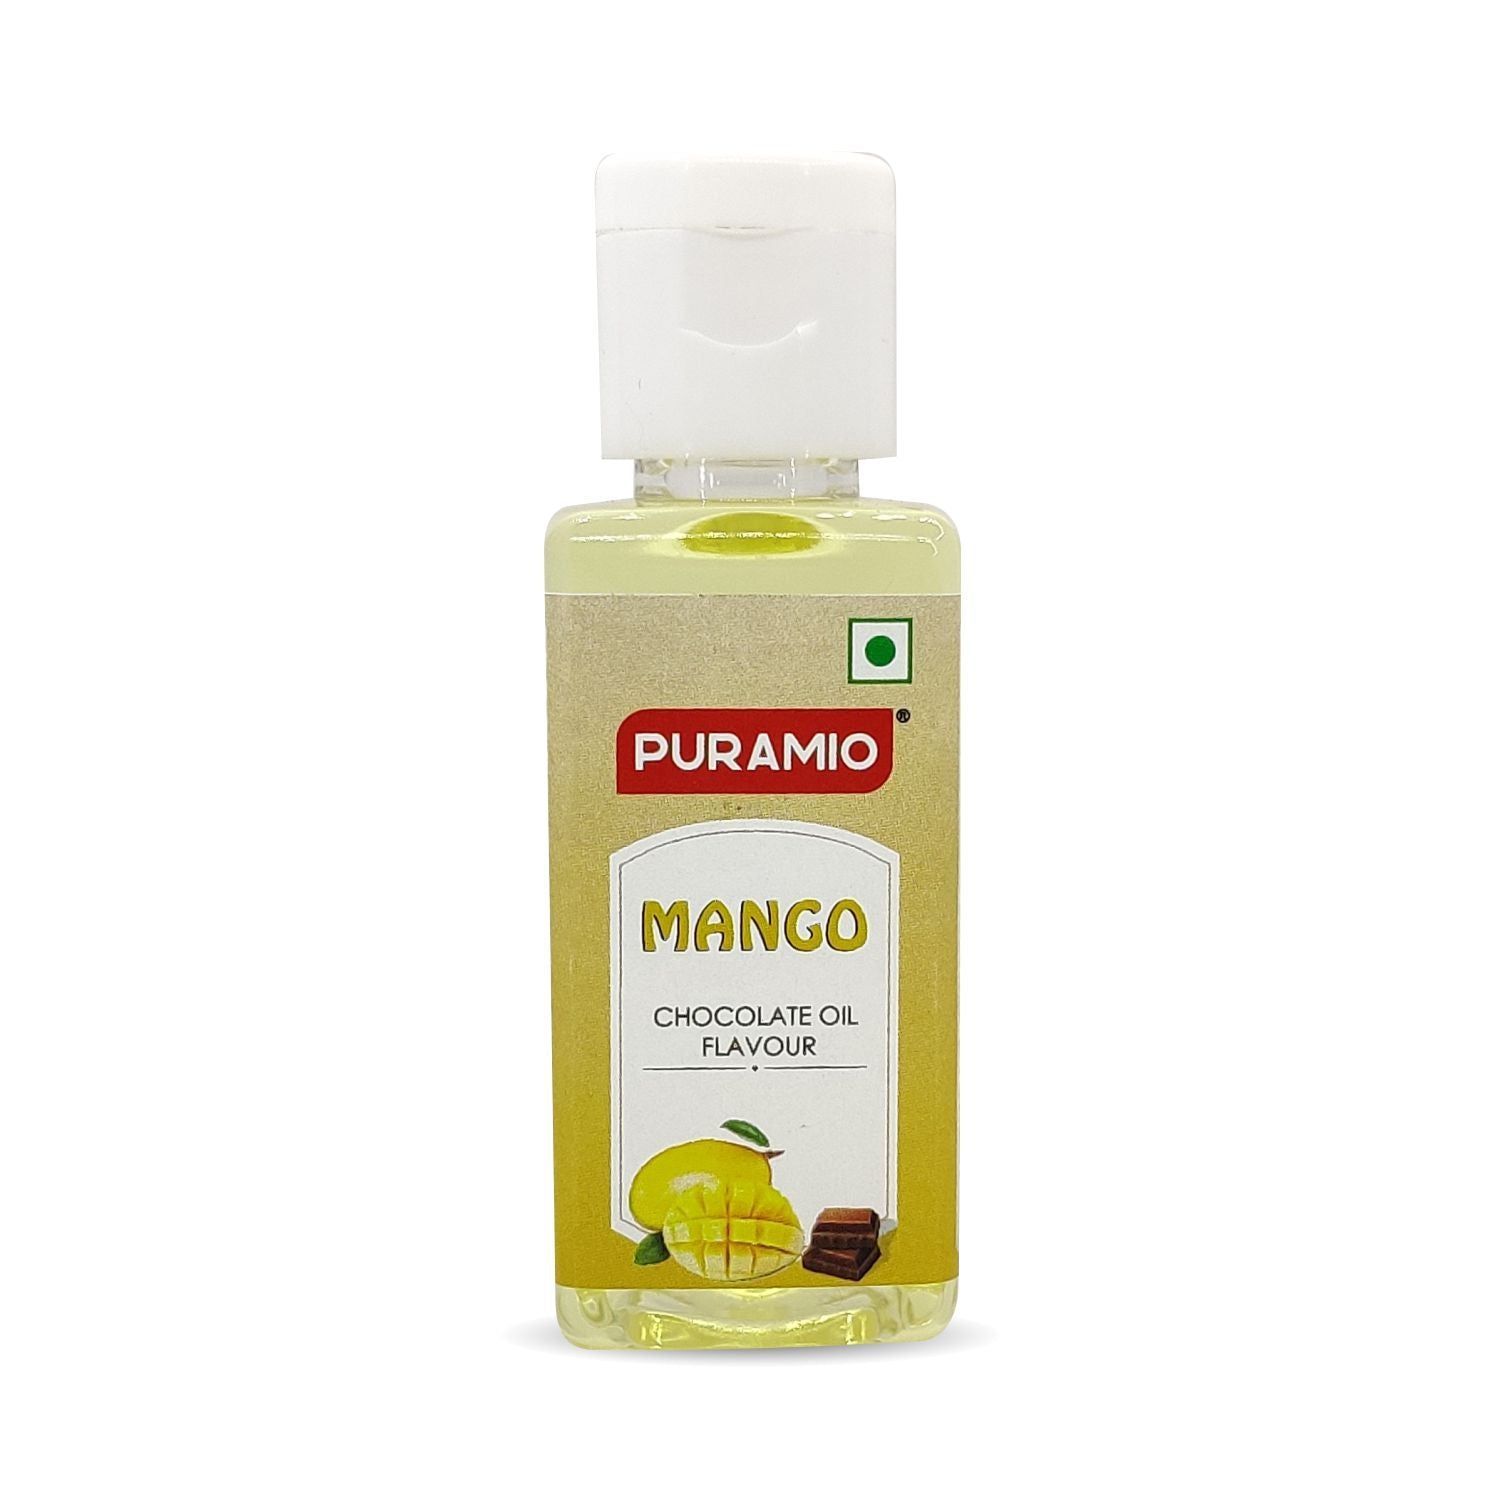 Puramio Chocolate Oil Flavour - Mango, 50 ml